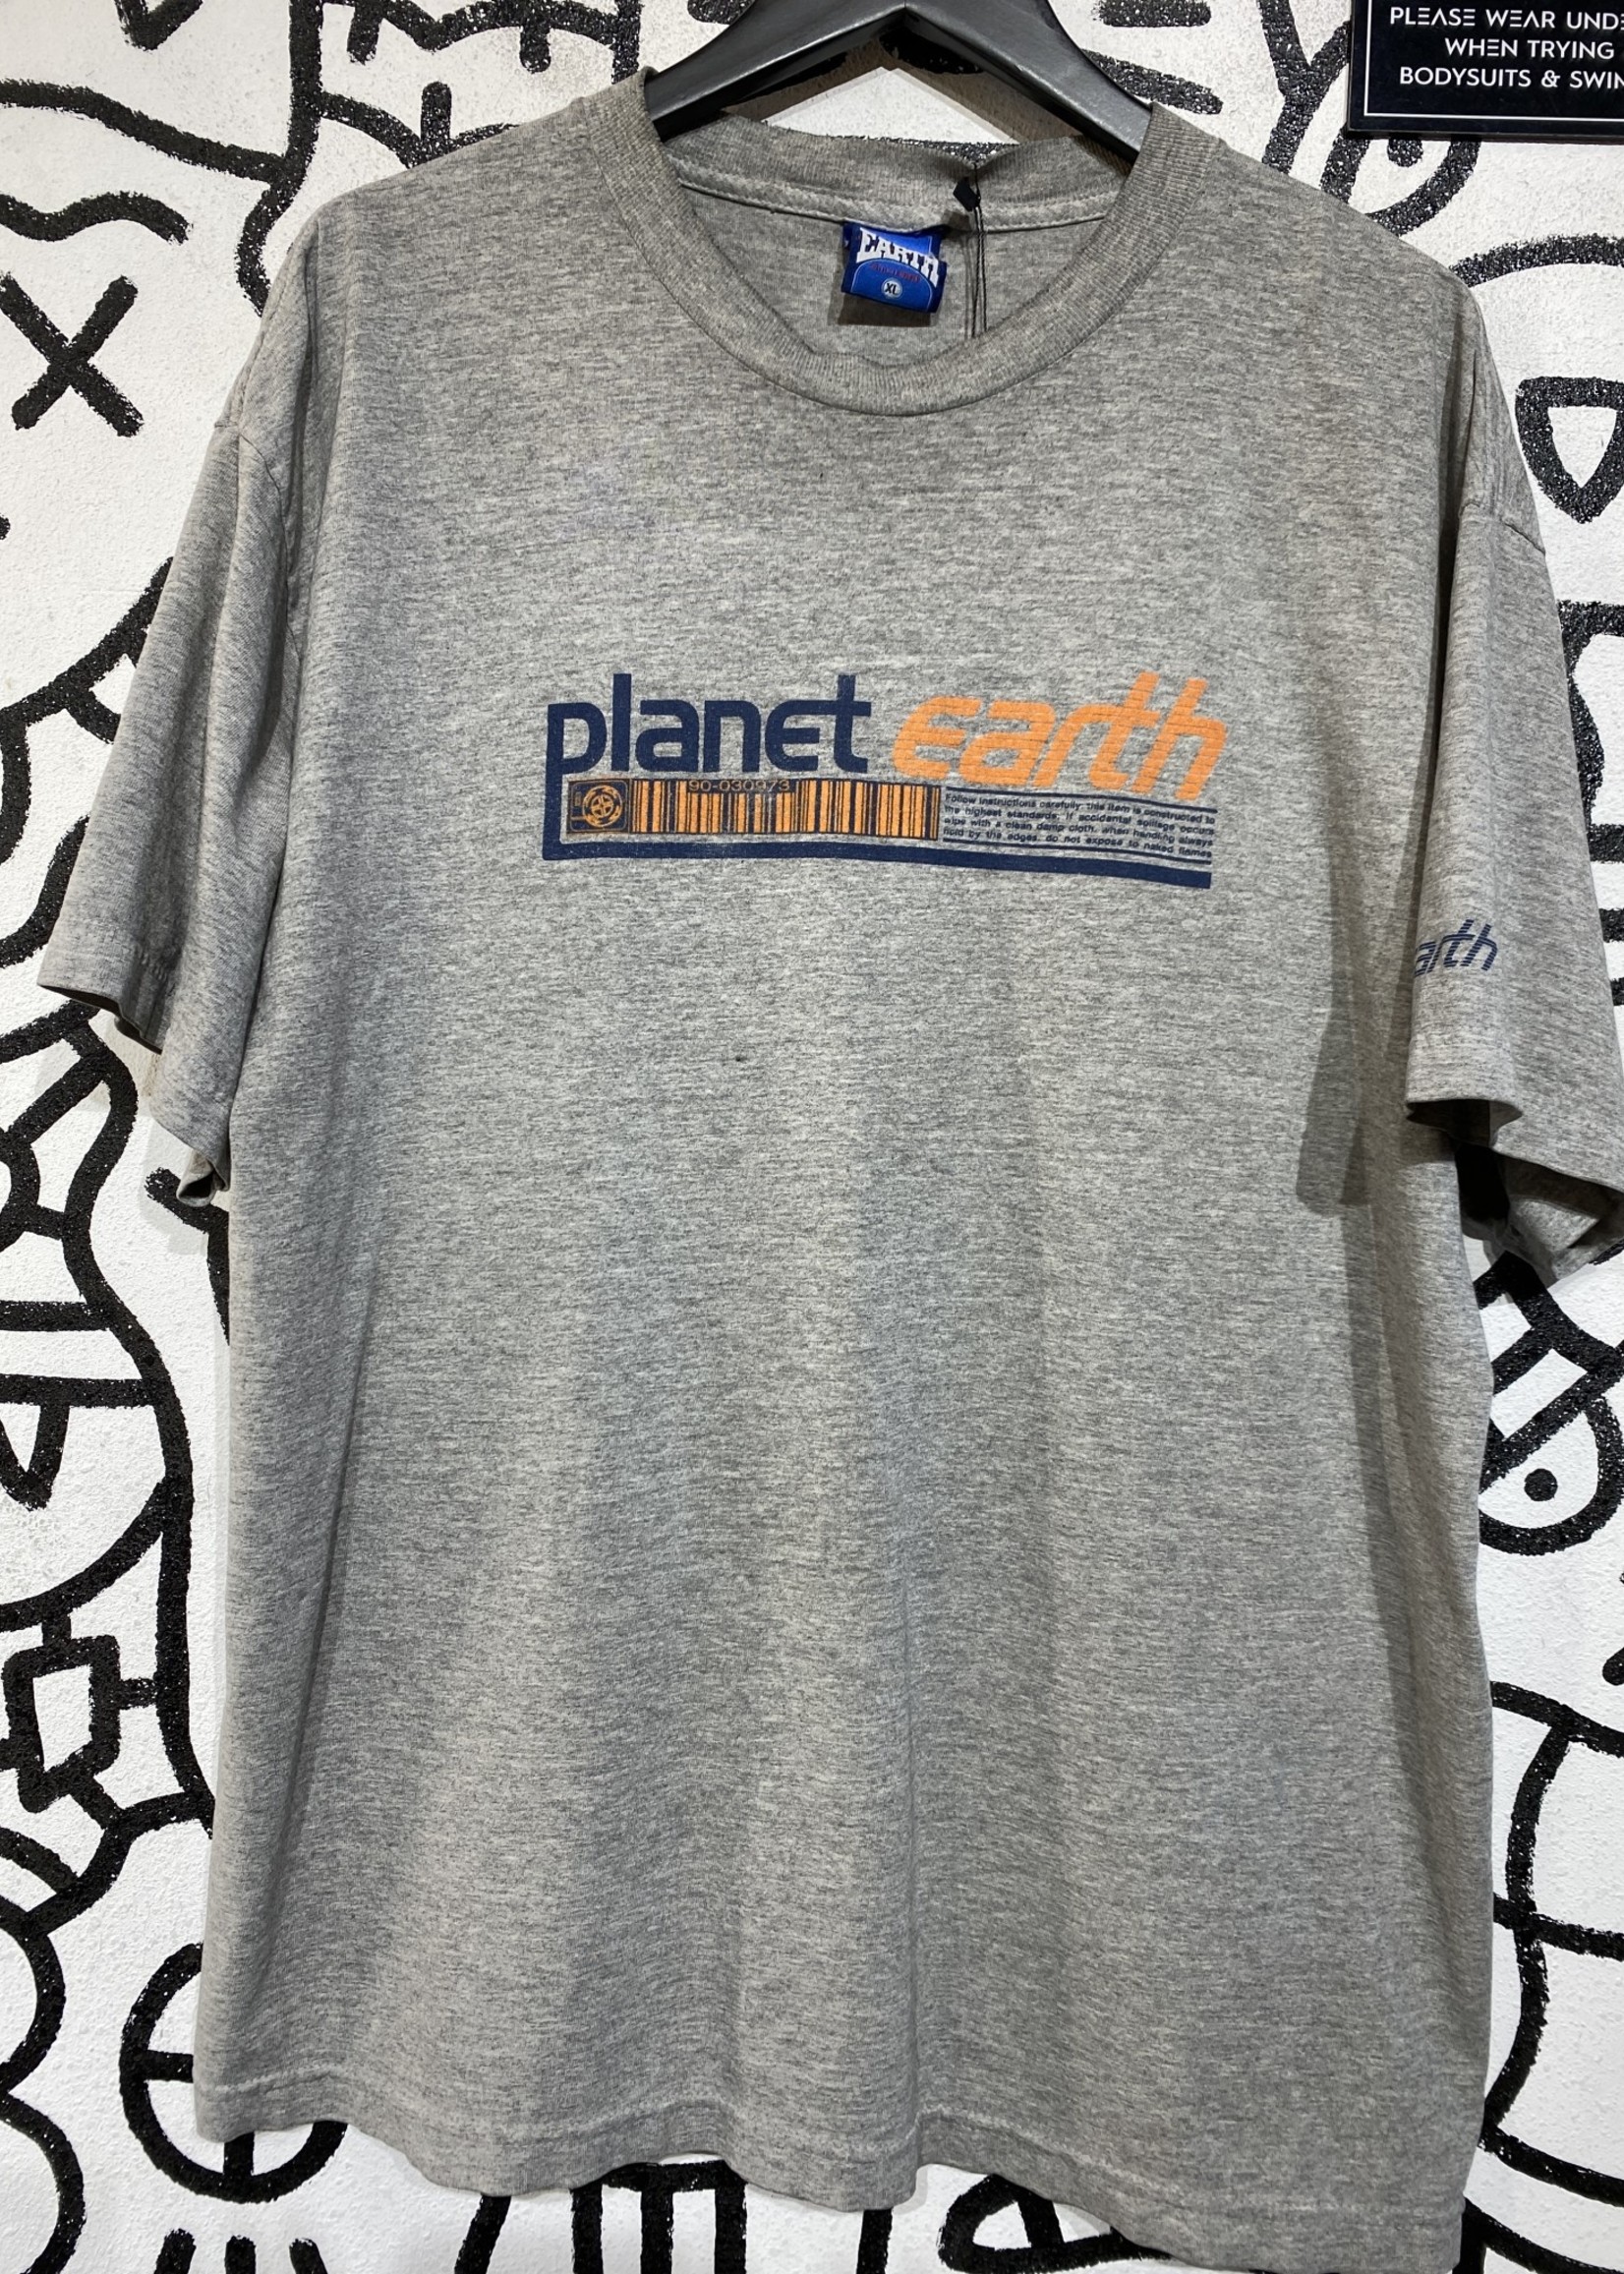 Planet Earth Grey Tee XL